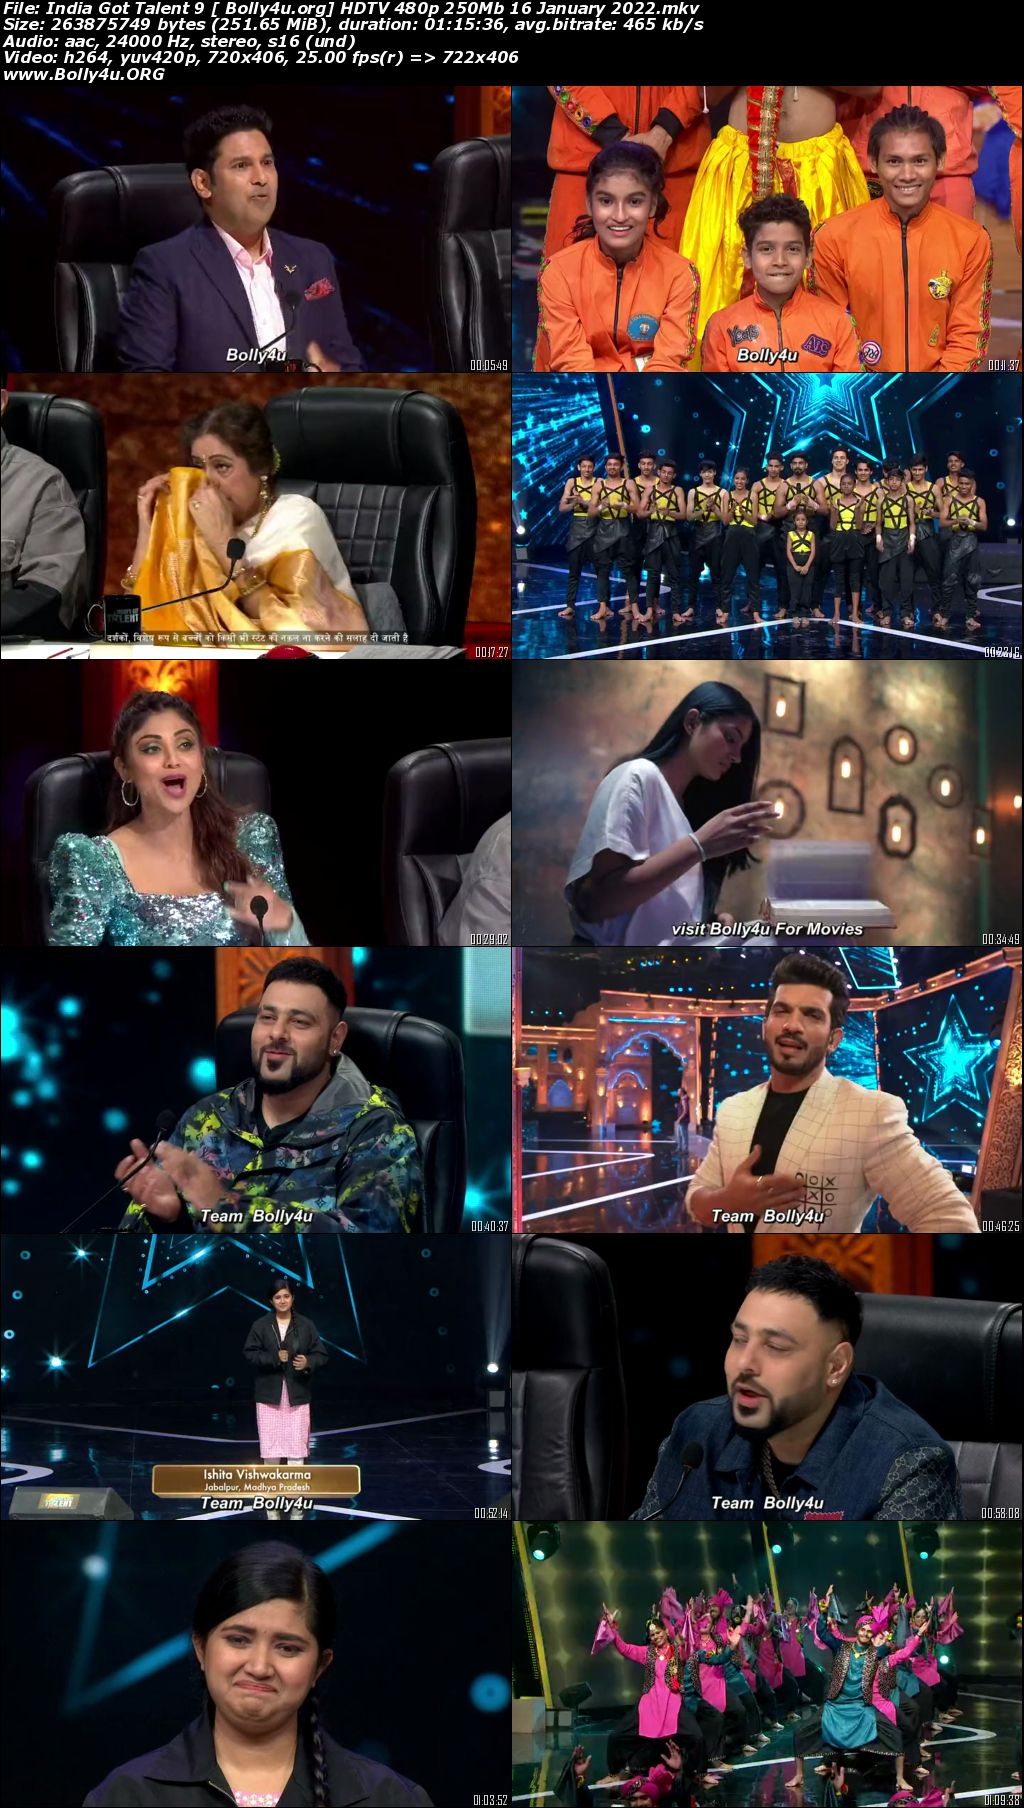 India Got Talent 9 HDTV 480p 250Mb 16 January 2022 Download